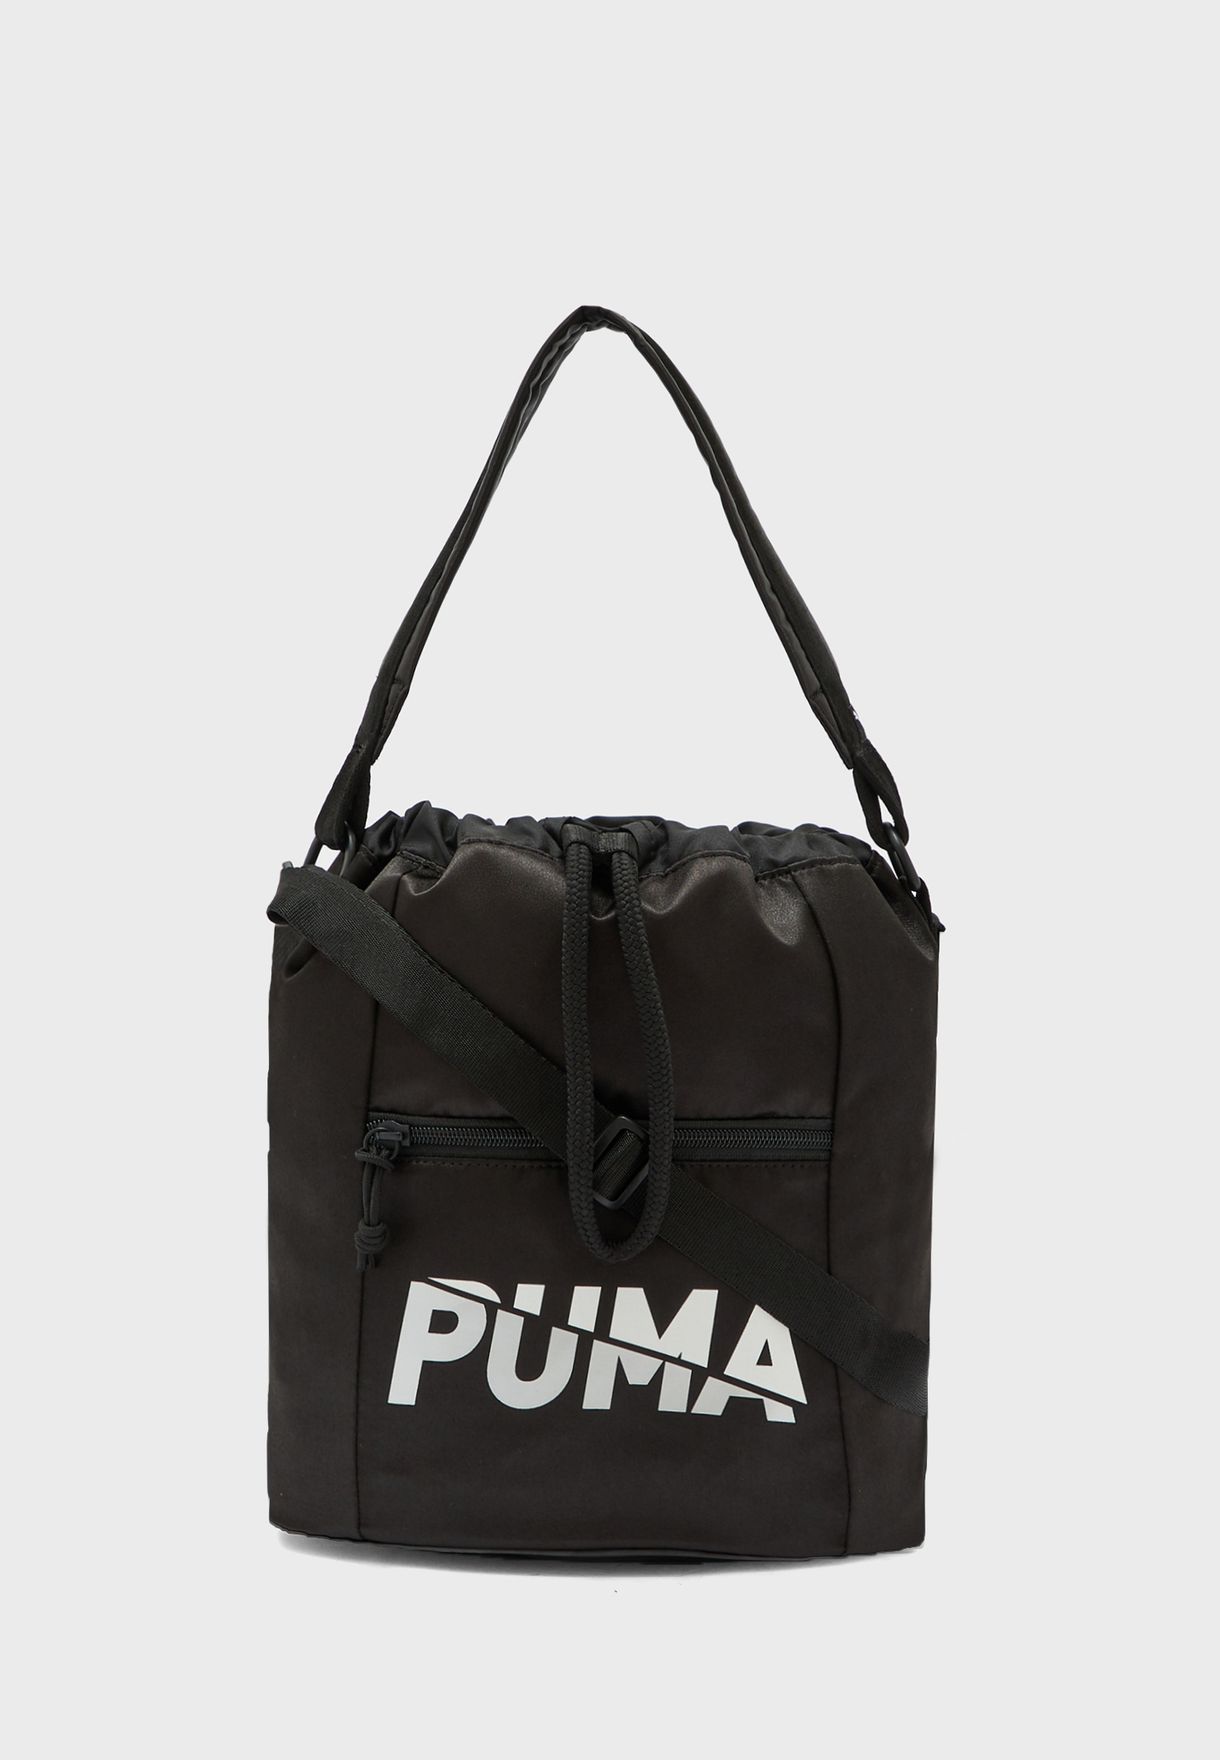 puma tote bag for sale